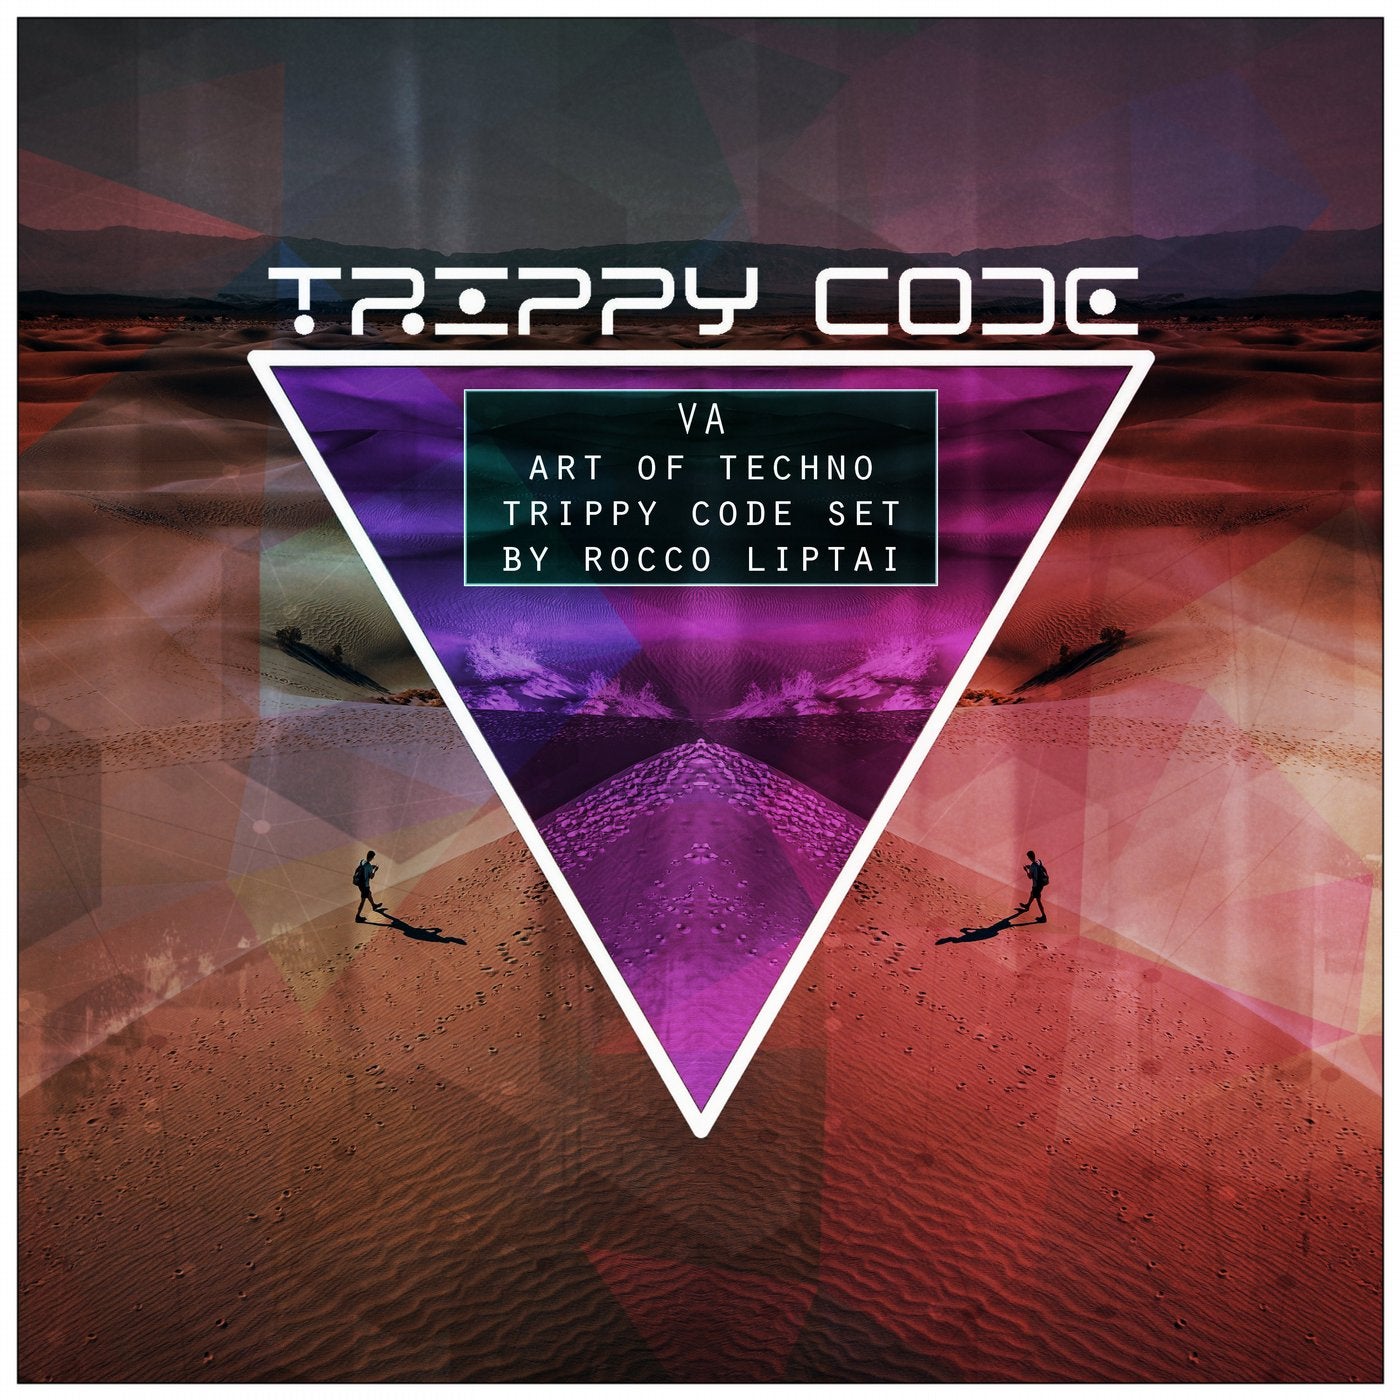 Art of Techno Trippy Code Set by Rocco Liptai